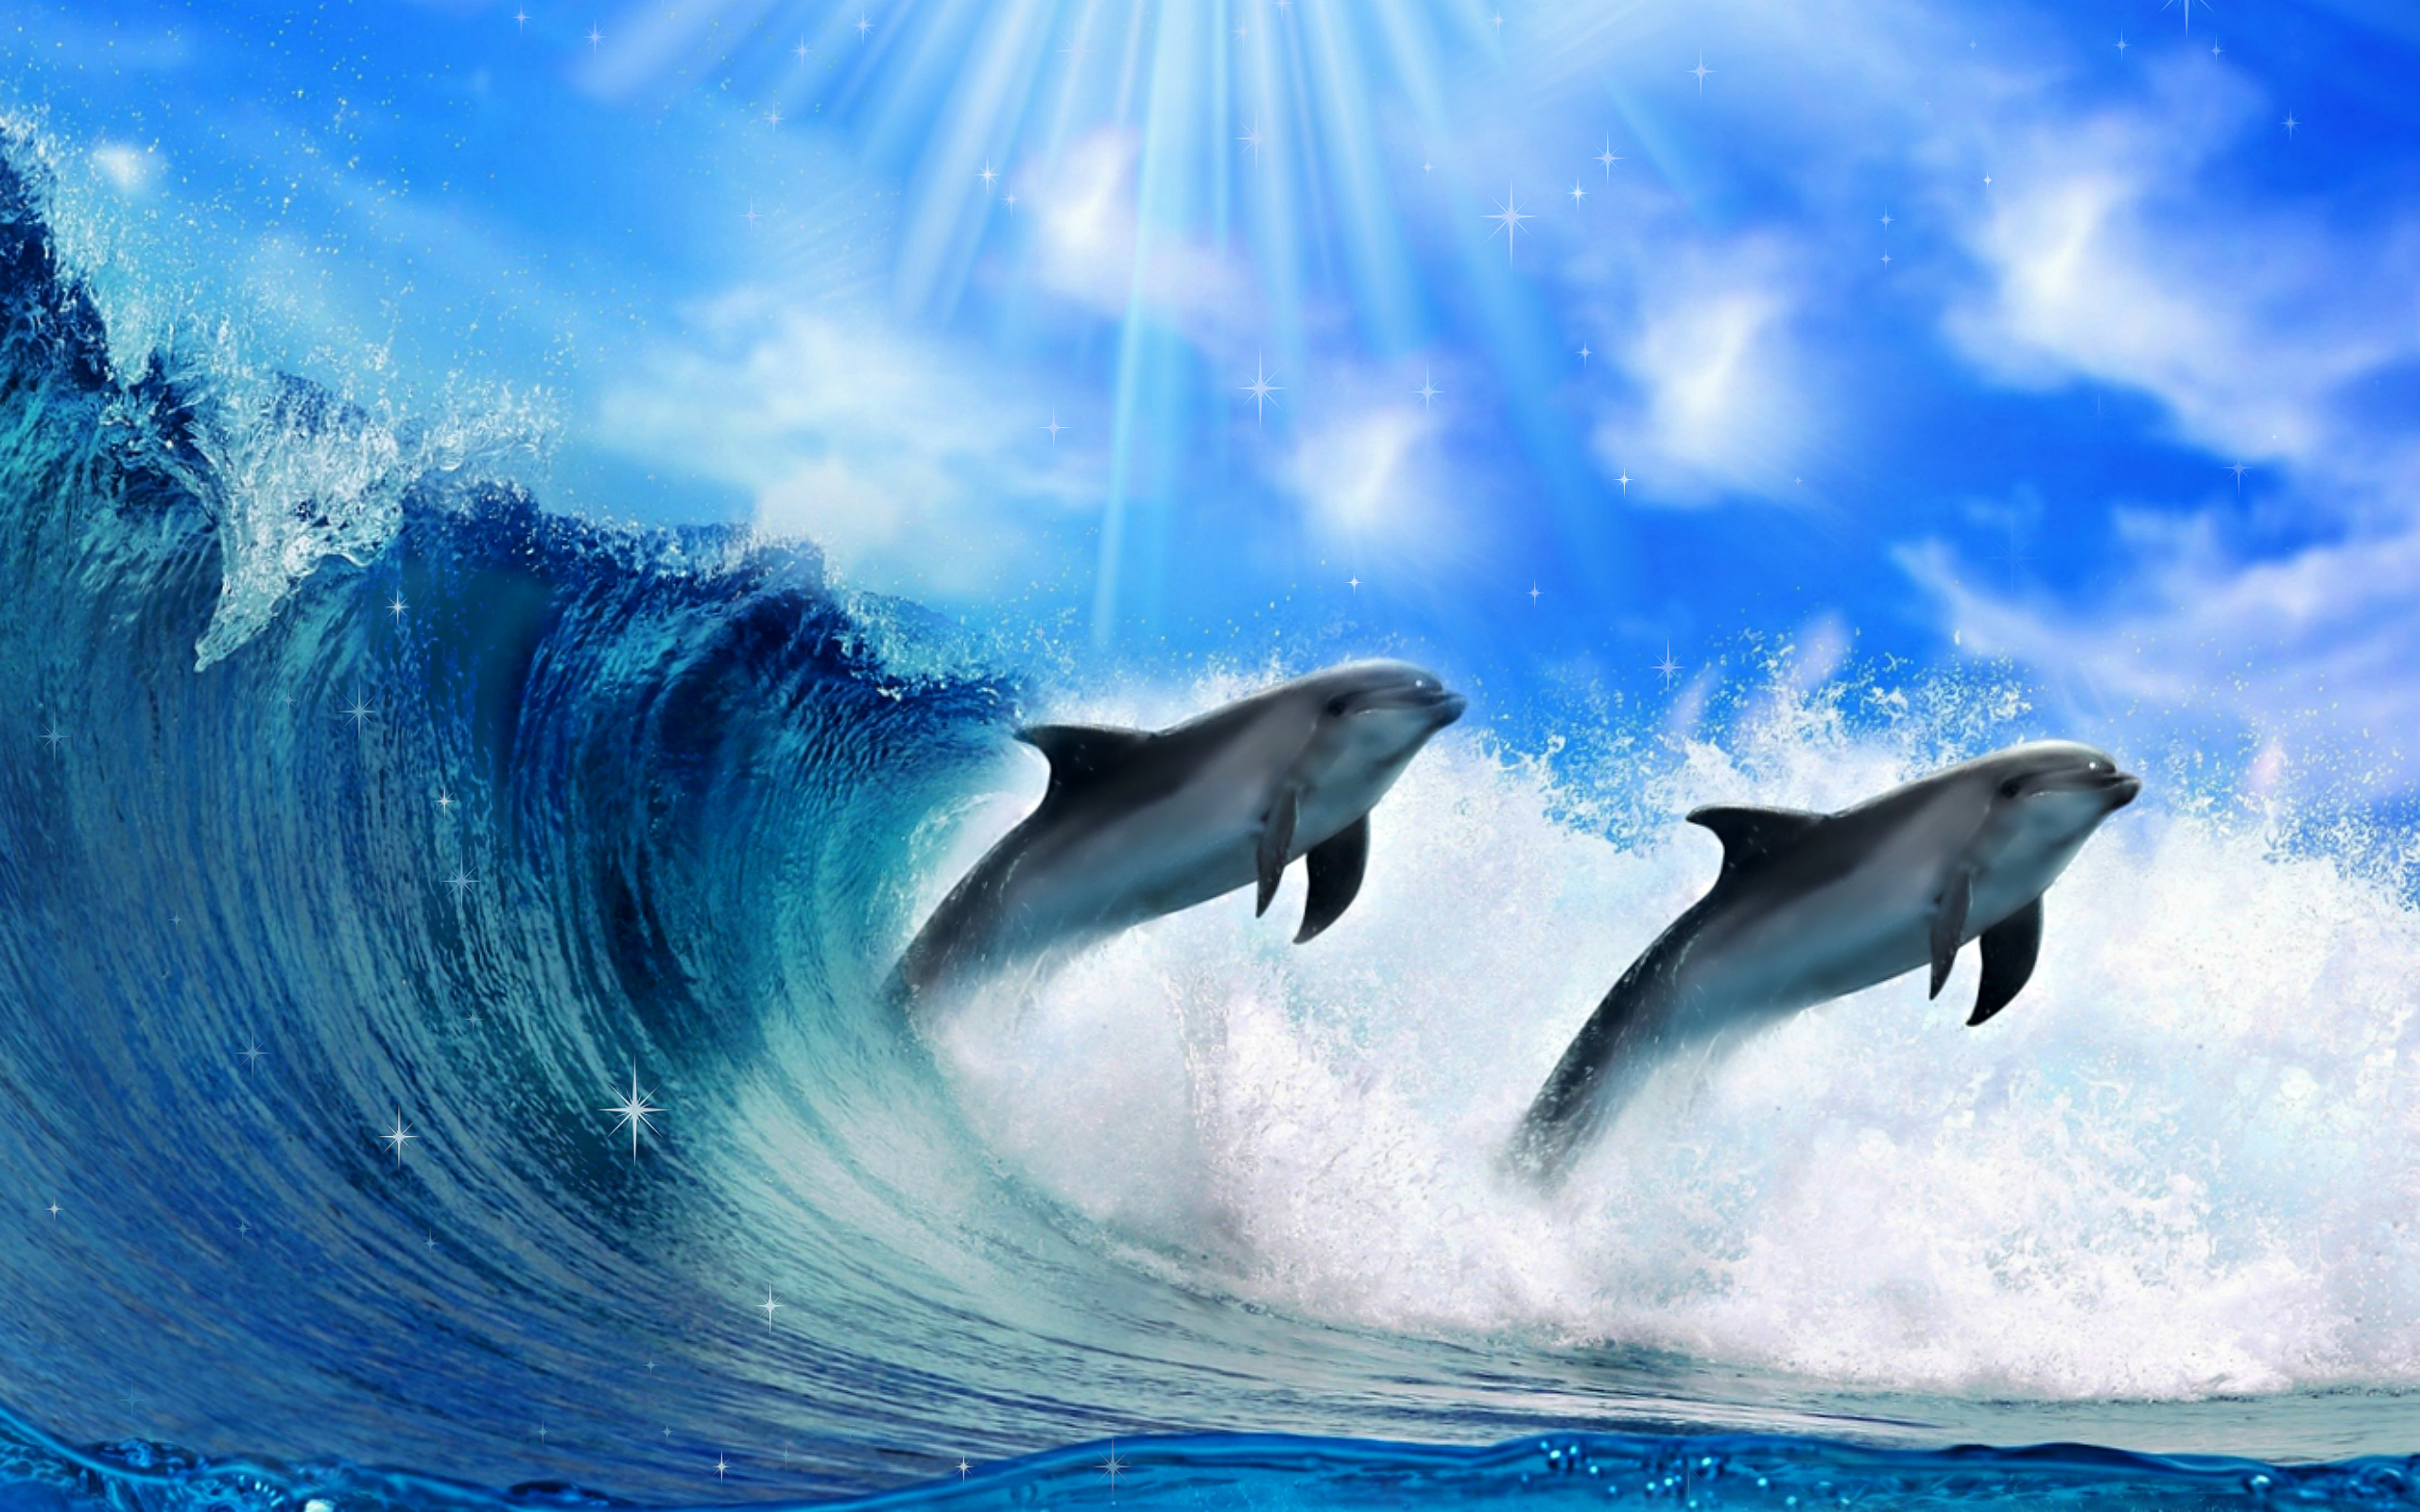 Gallery For Gt Cute Dolphin Desktop Wallpaper